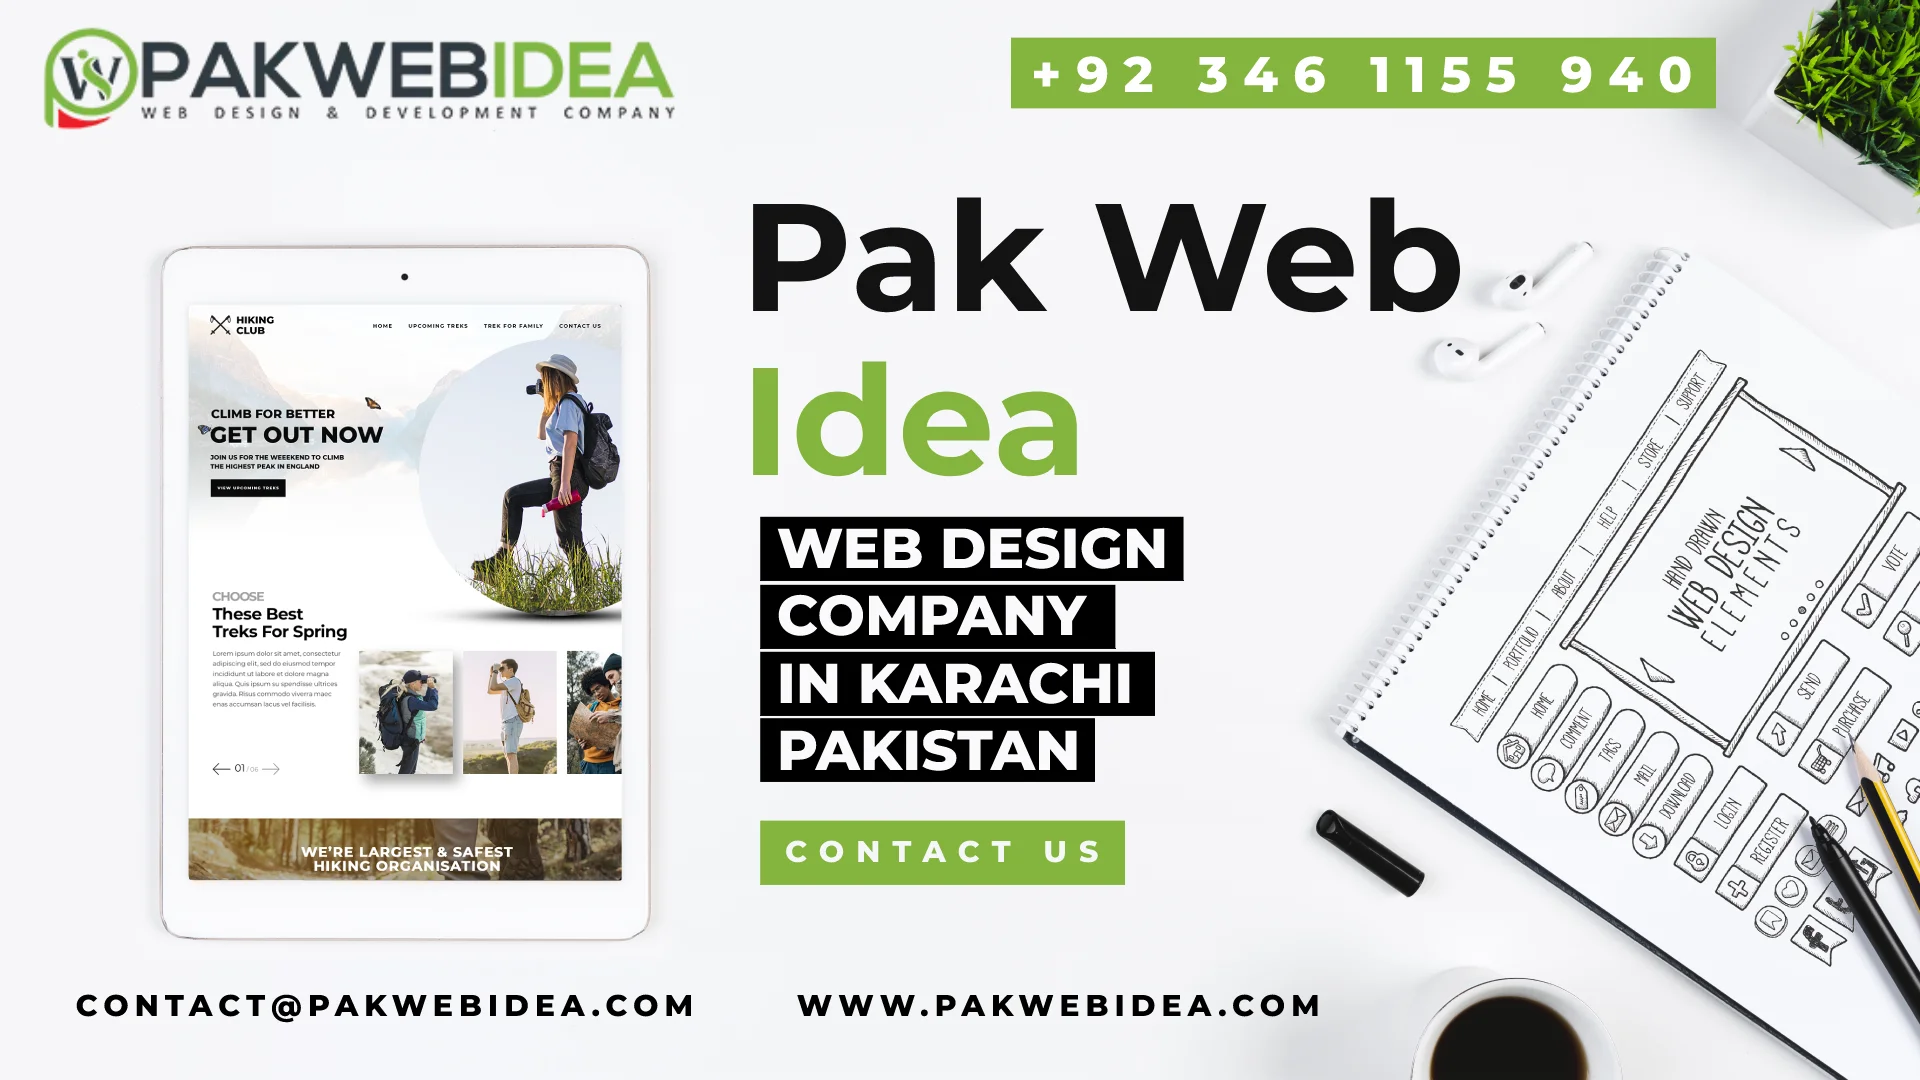 Web Design Company in Karachi